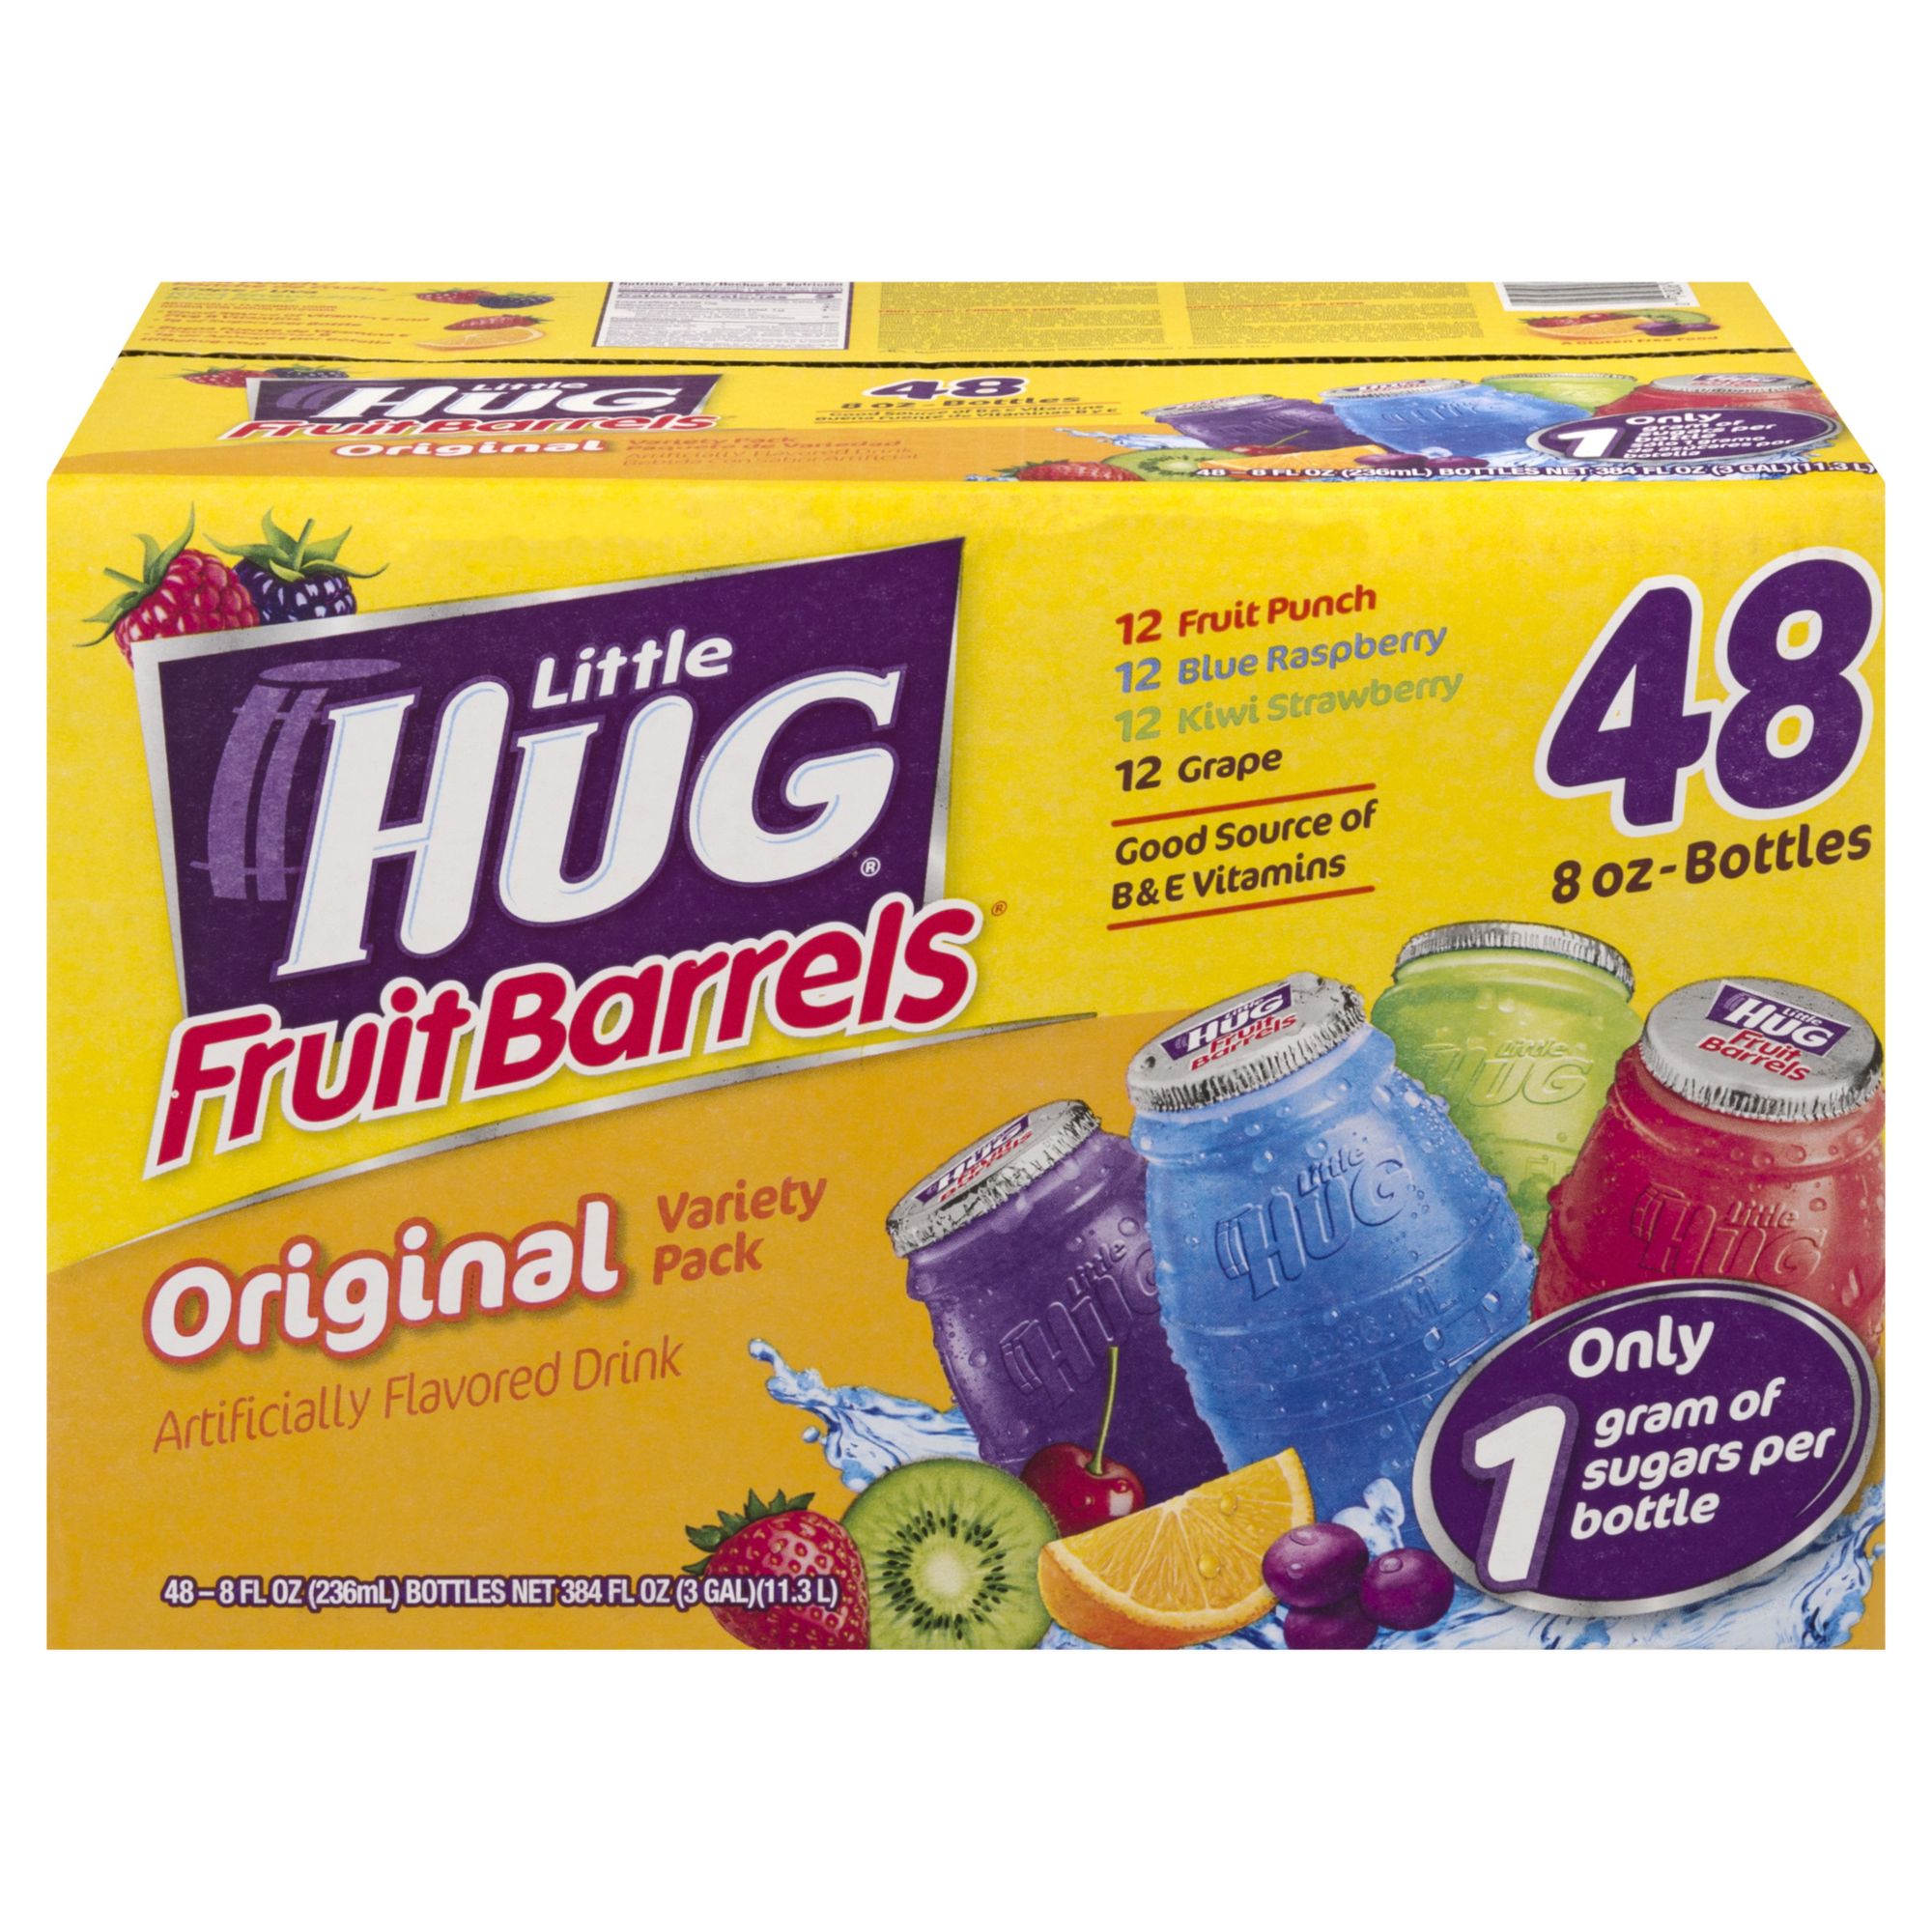 Little Hugs Fruit Barrels Variety Pack, 48 ct./8 oz.